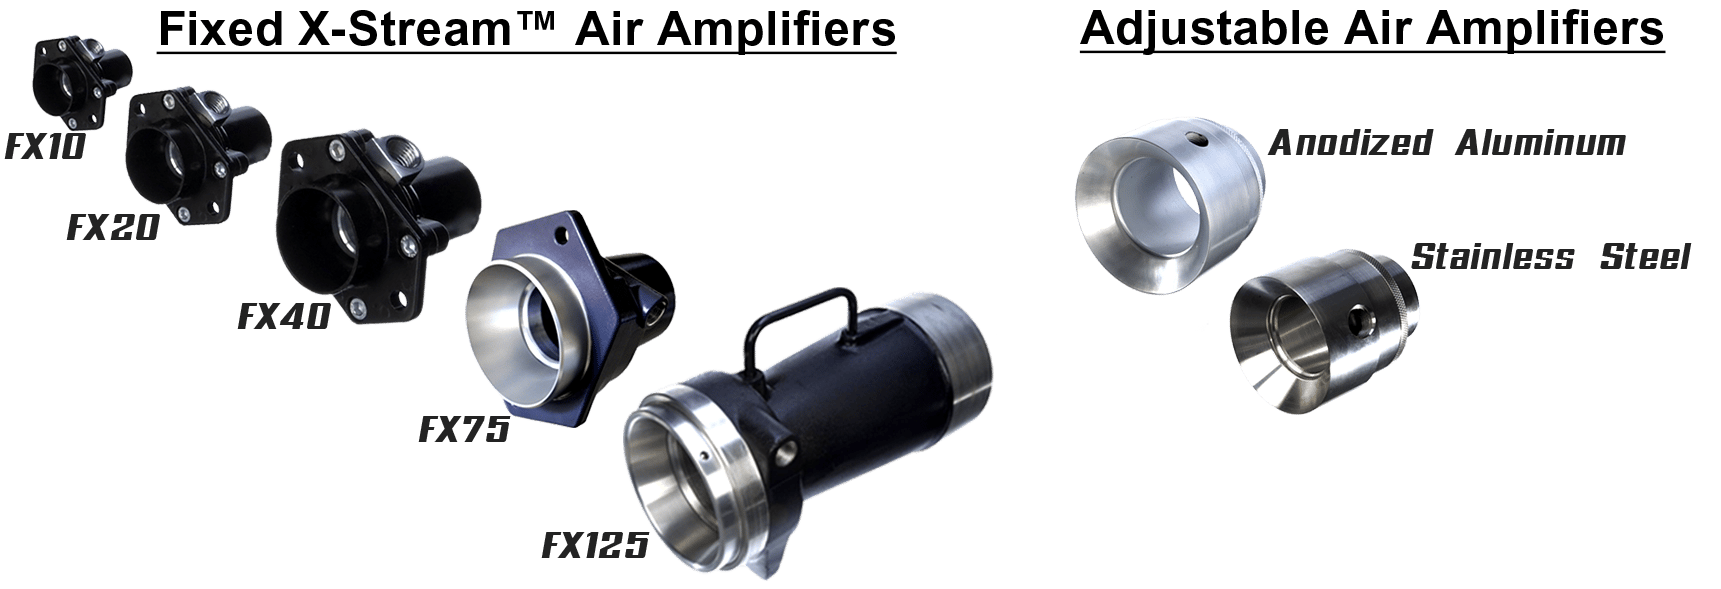 Fix X stream air amplifiers